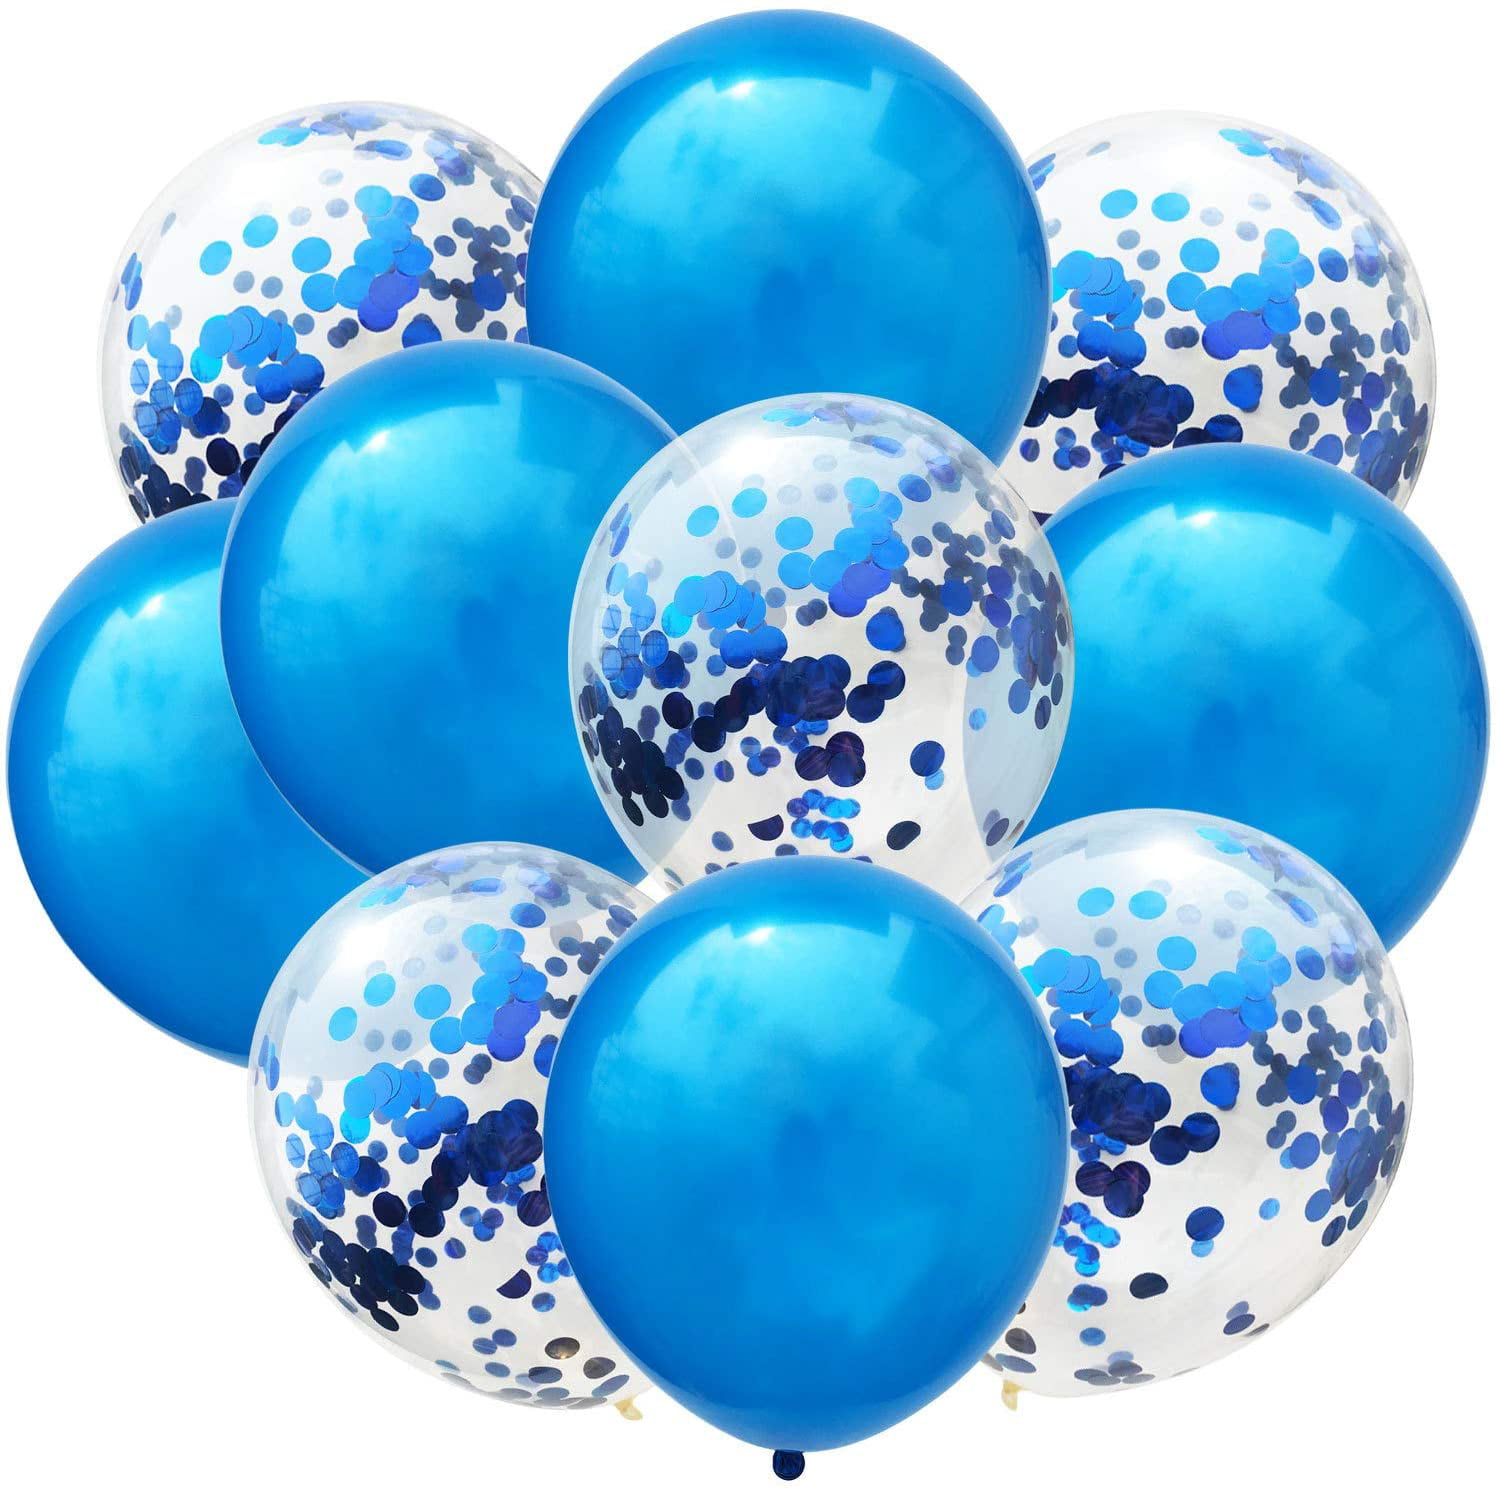 10pc 12" Dinosaur Latex Confetti Balloons Party Birthday Party Balloons Decor